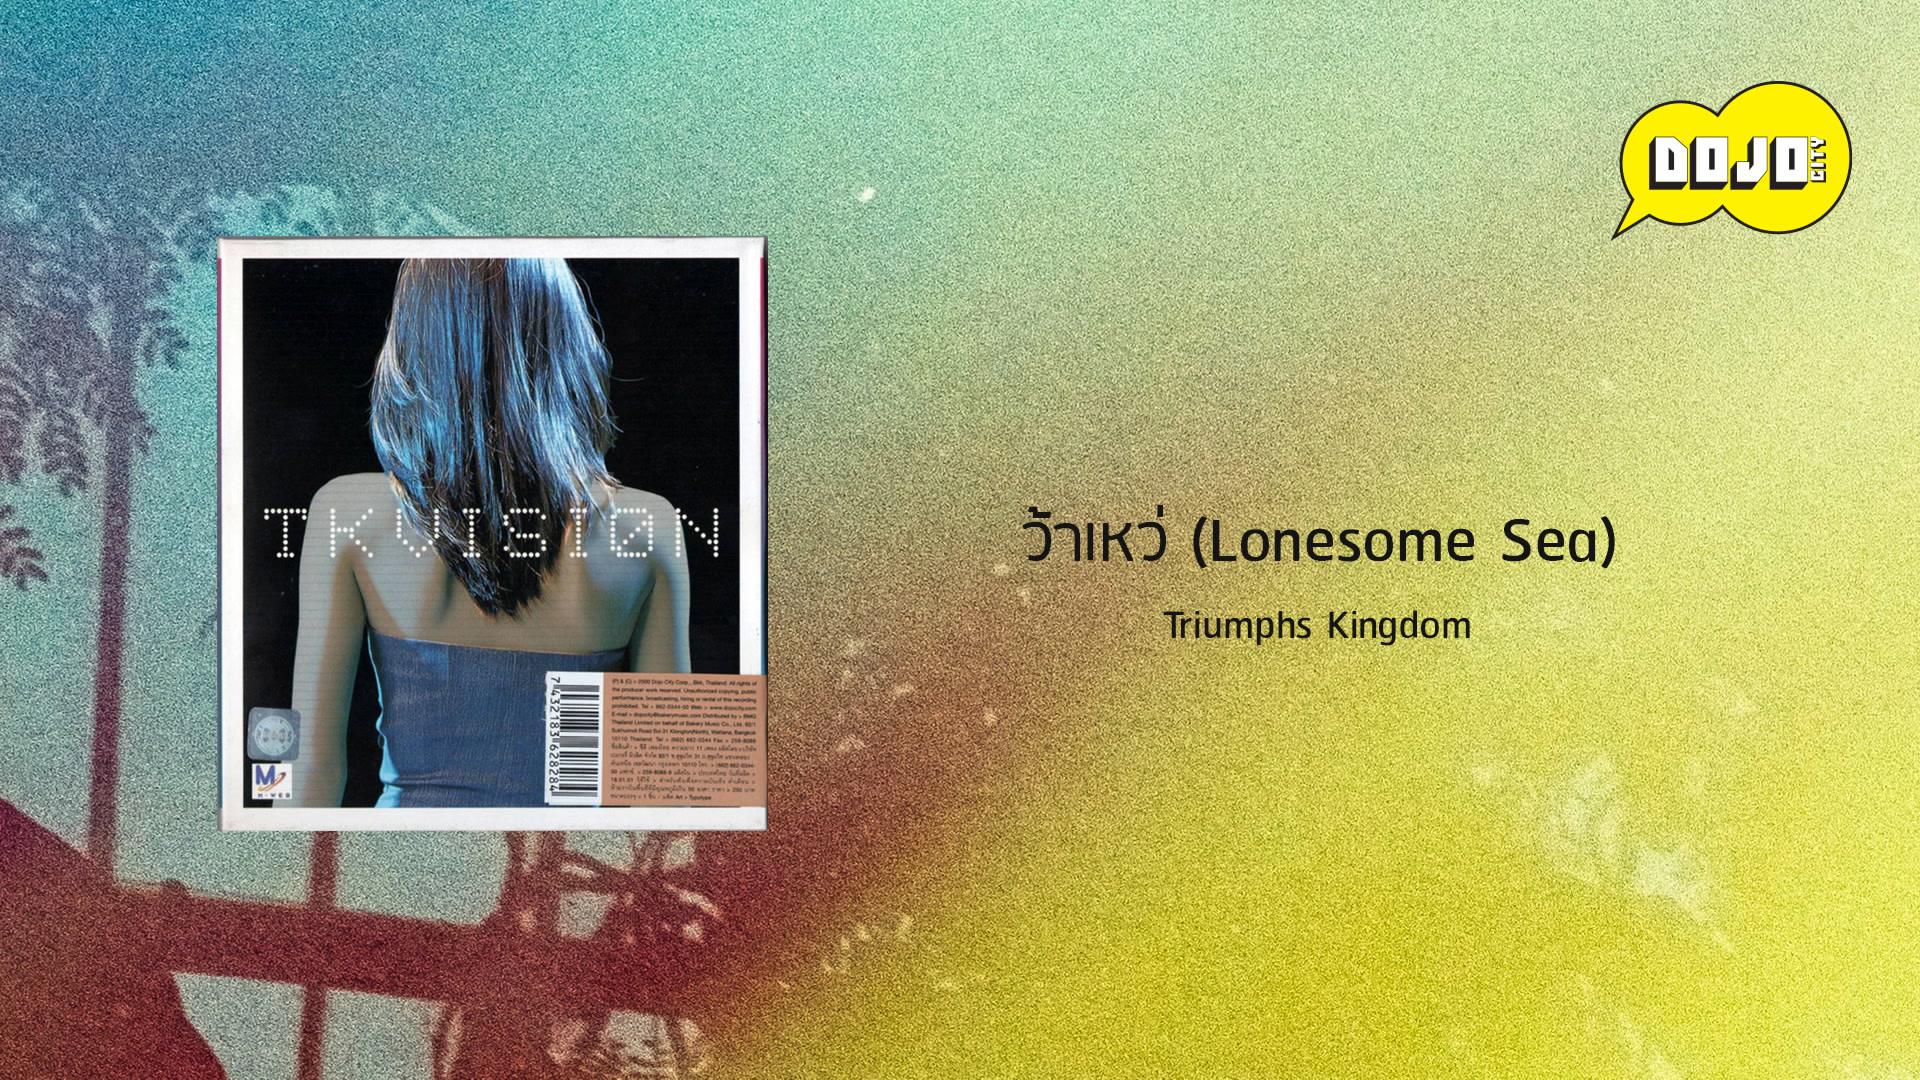 Triumphs Kingdom - ว้าเหว่ (Lonesome Sea)